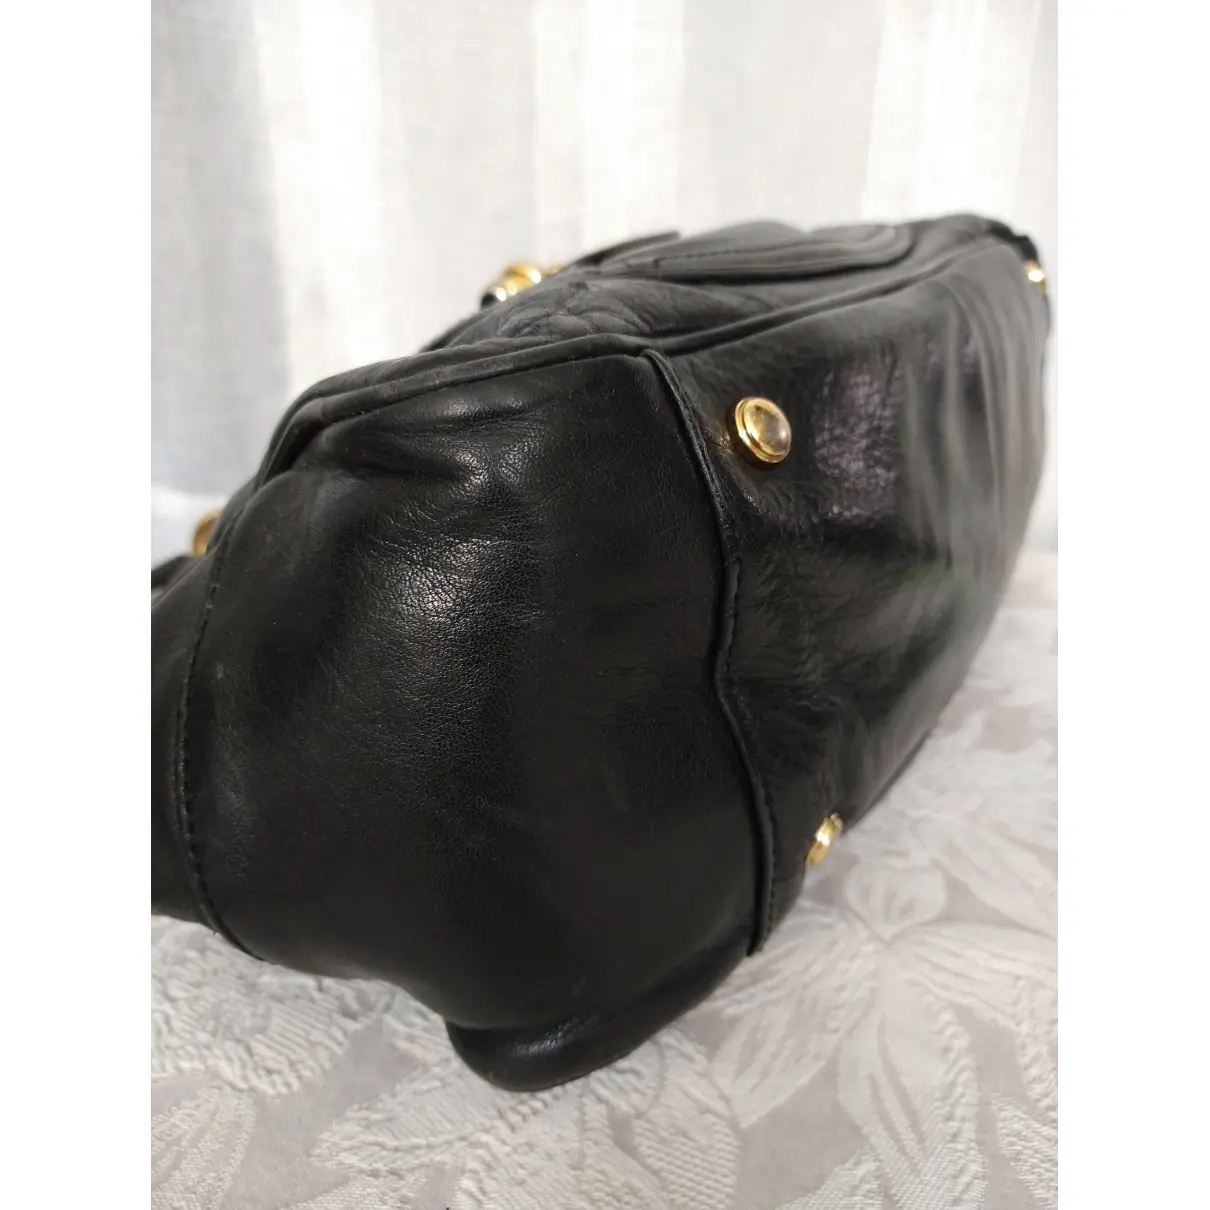 Buy B. Makowsky Leather handbag online